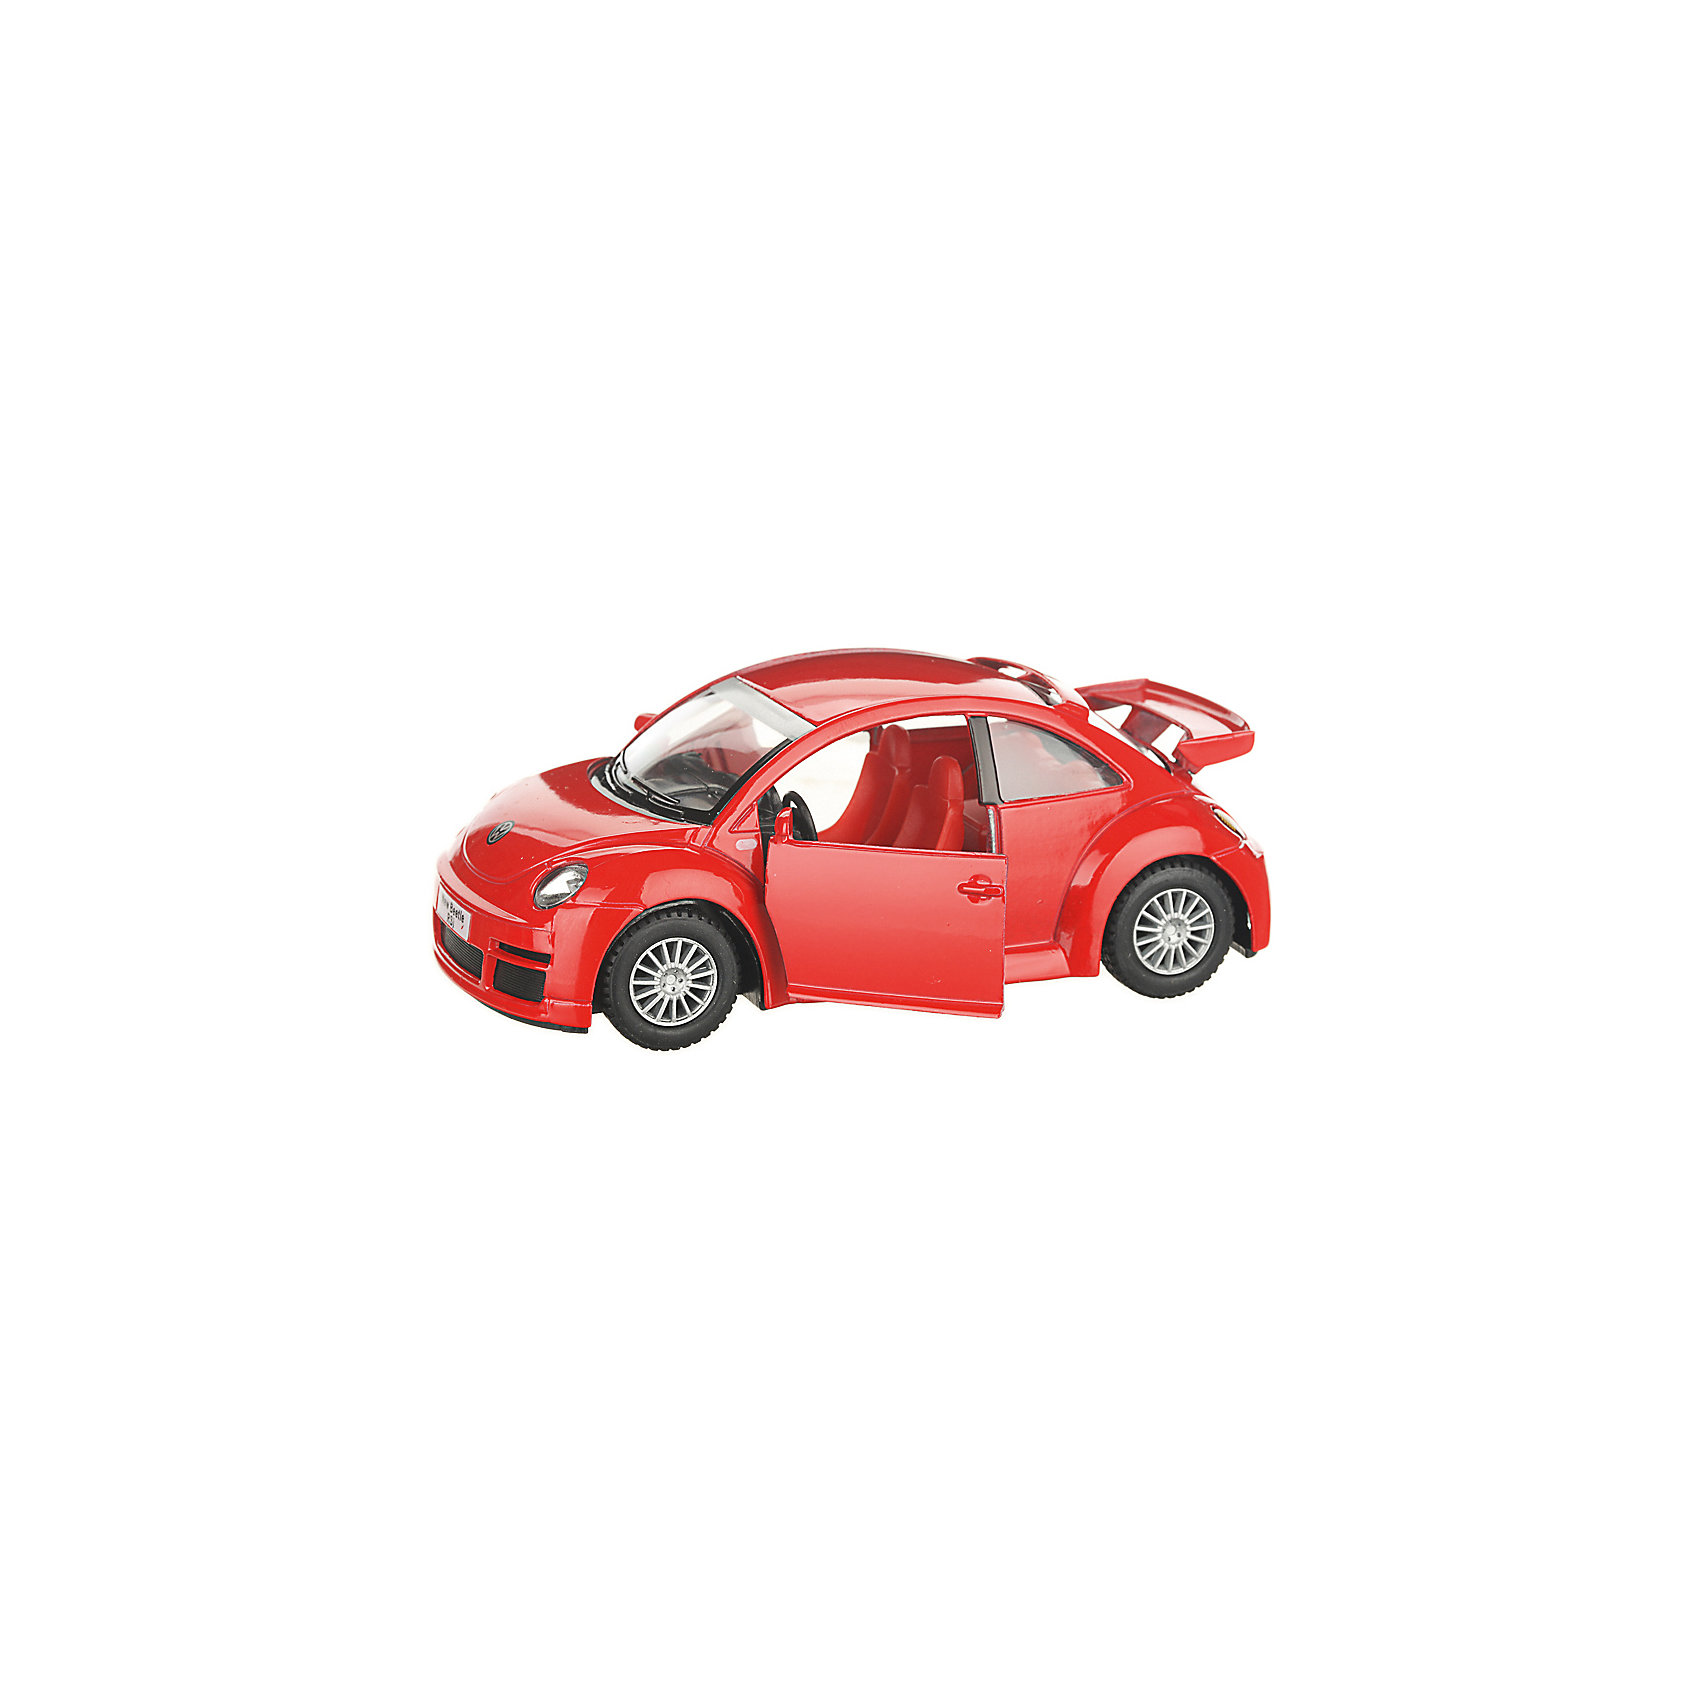 Коллекционная машинка Volkswagen Beetle New Rsi, красная Serinity Toys 13233329